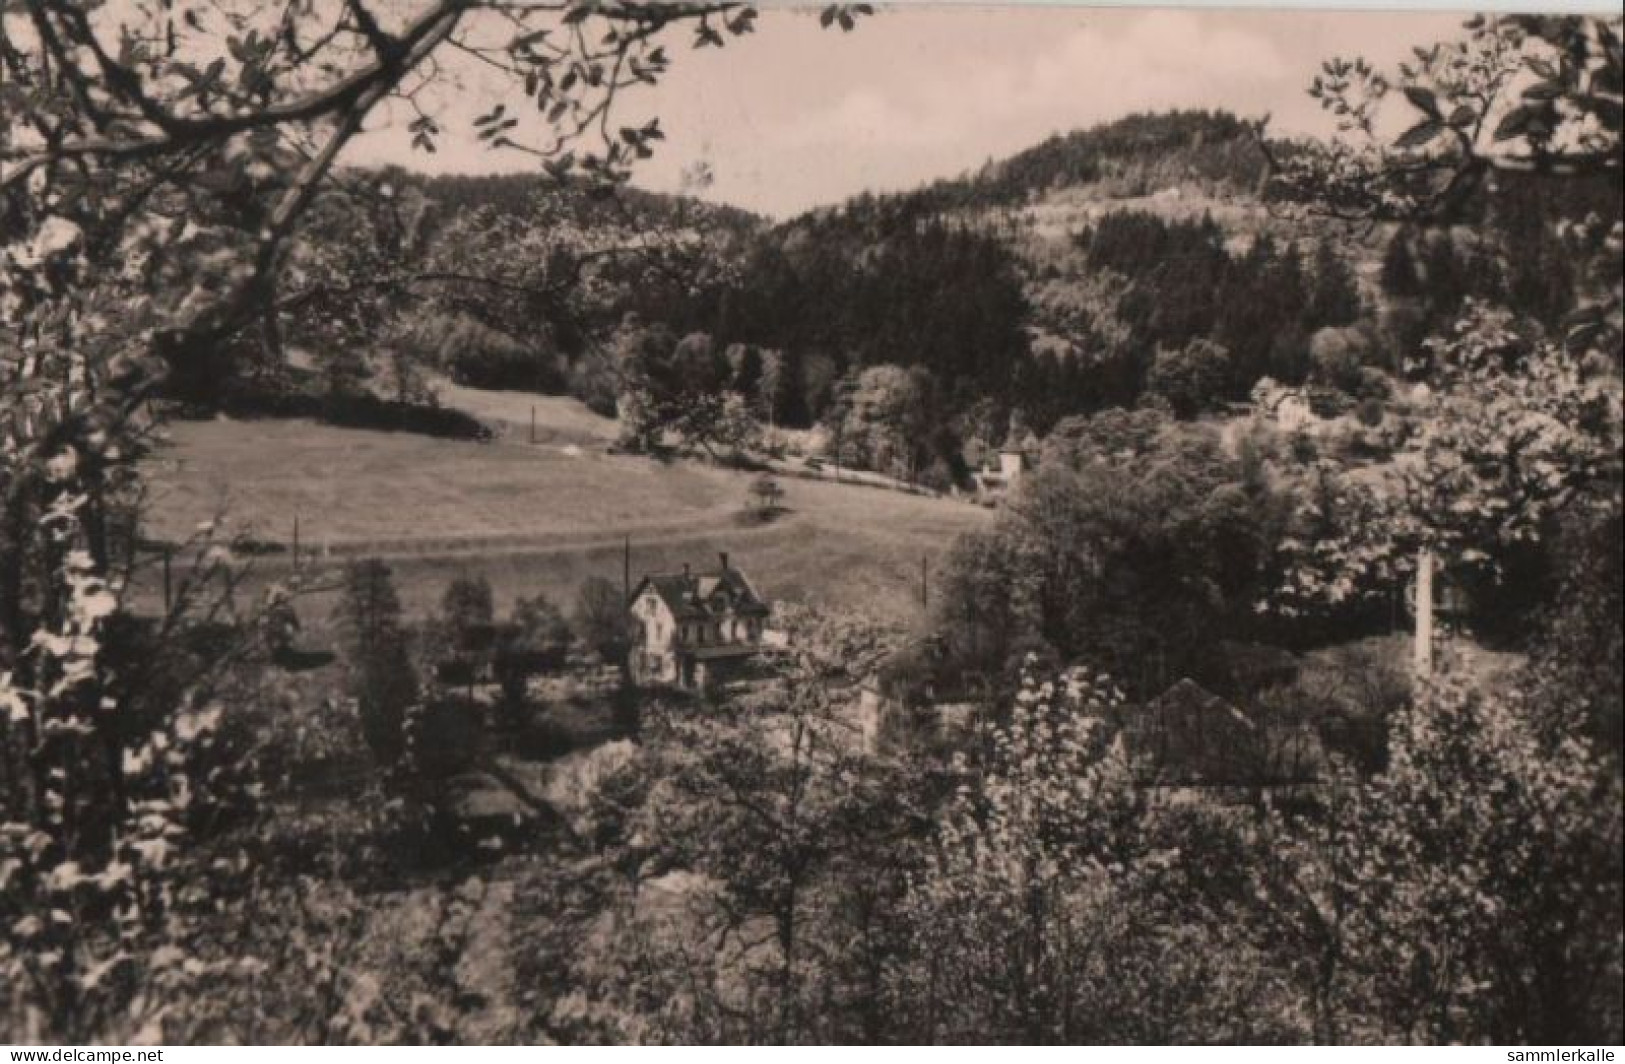 87575 - Pöhl-Jocketa - Barthmühle - 1968 - Poehl